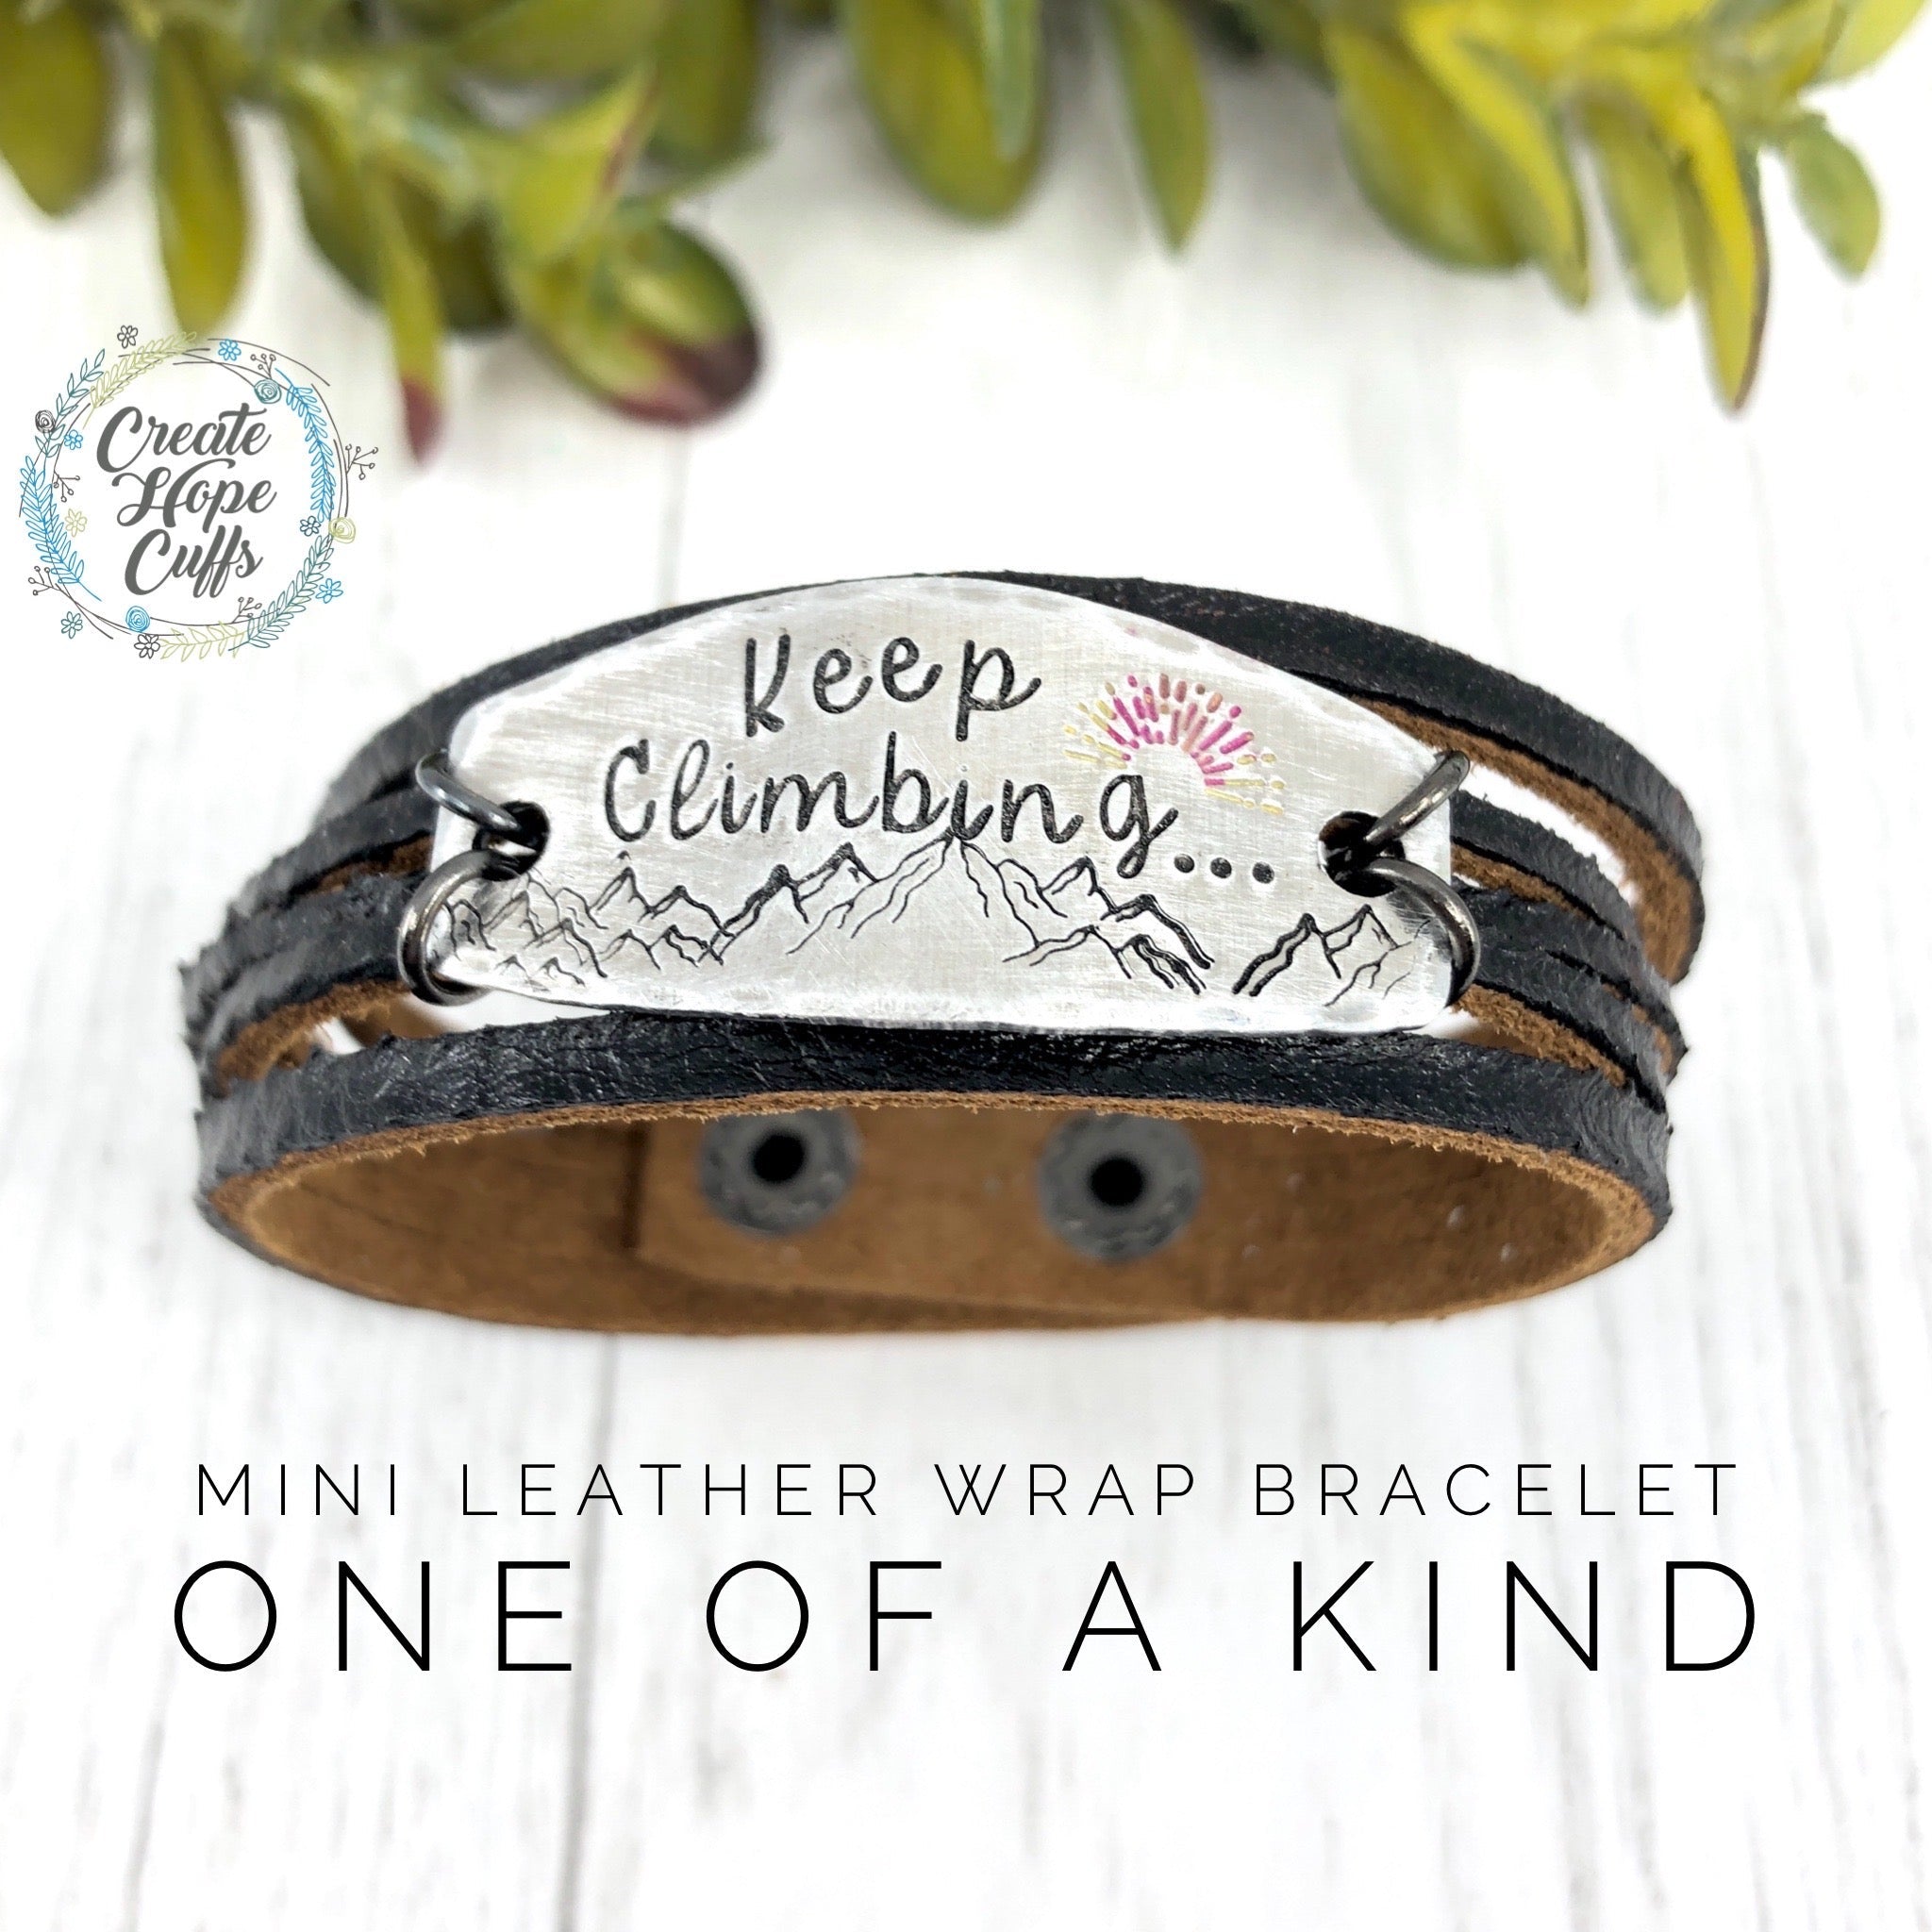 (Wholesale) Black KEEP CLIMBING Mini Leather Wrap Bracelet | Women Teens | Adjustable Leather Wrap Create Hope Cuffs 